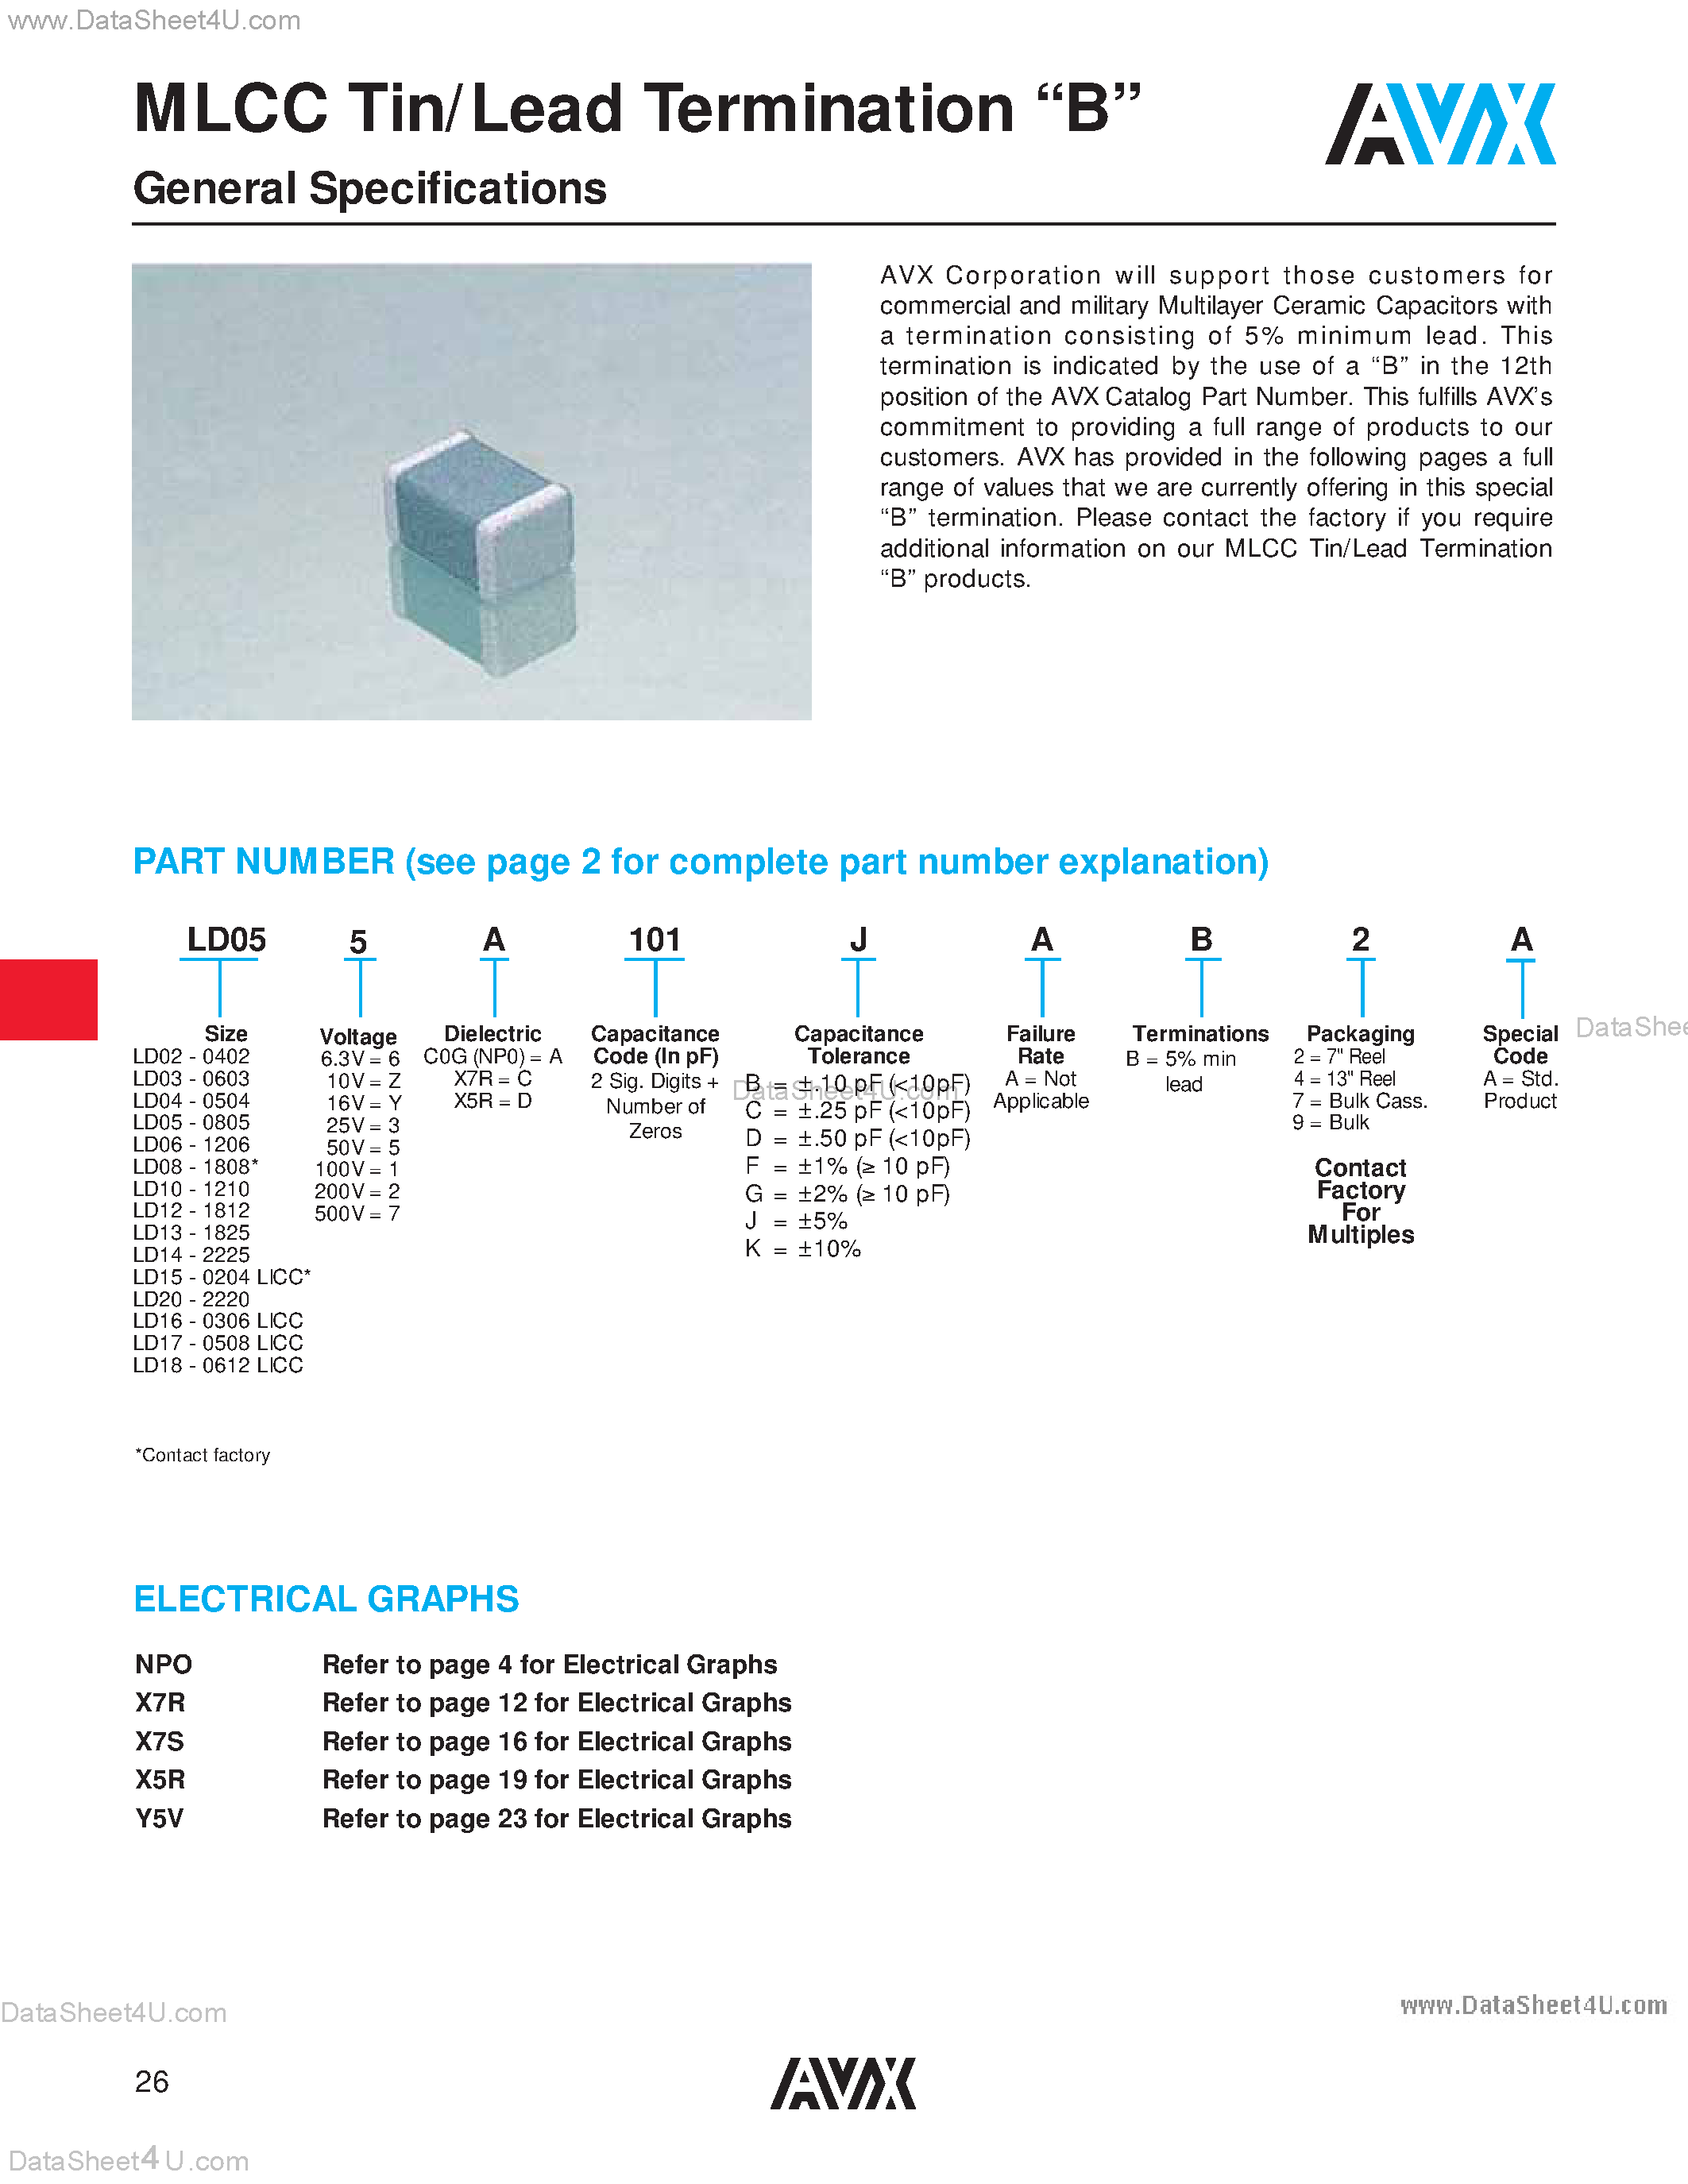 Datasheet LD122Axxxx - (LD Series) MLCC Tin / Lead Termination B page 1